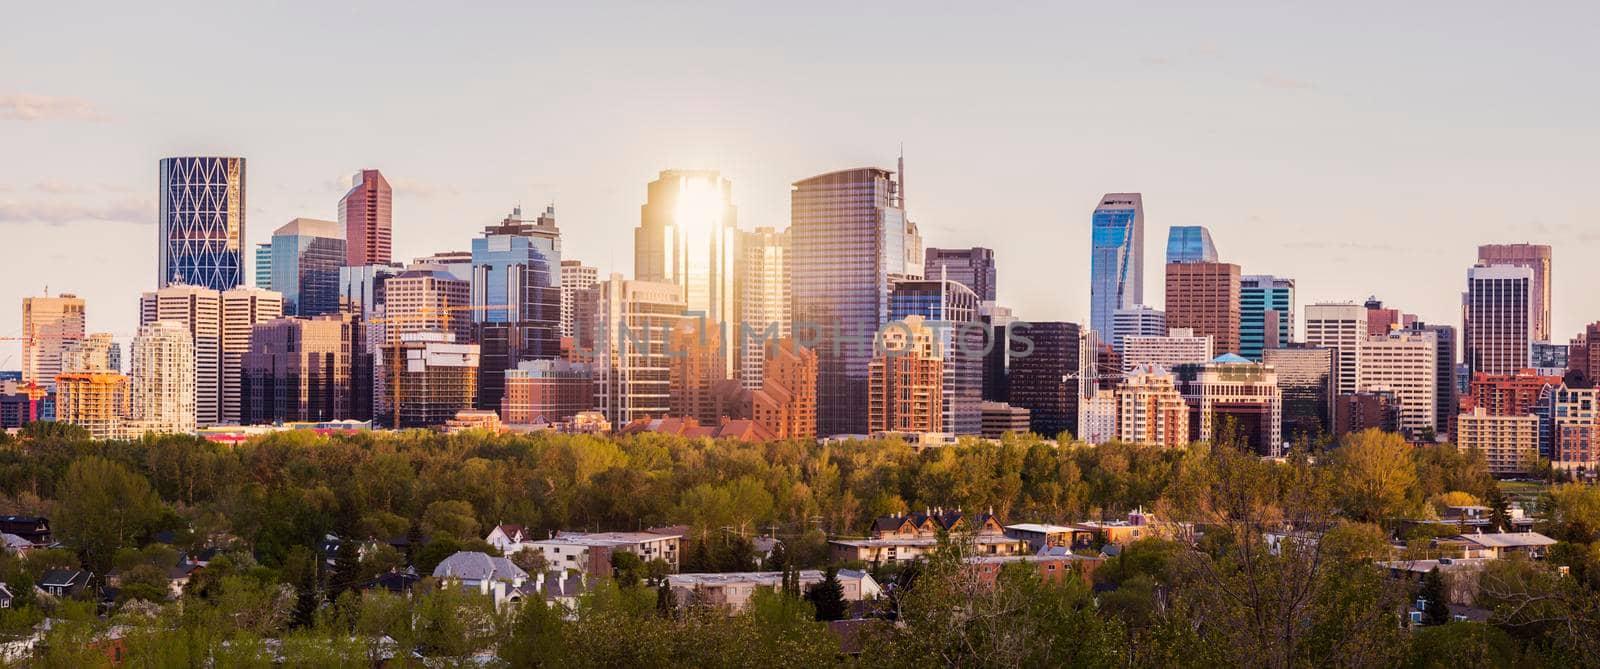 Calgary - panorama of city. Calgary, Alberta, Canada.